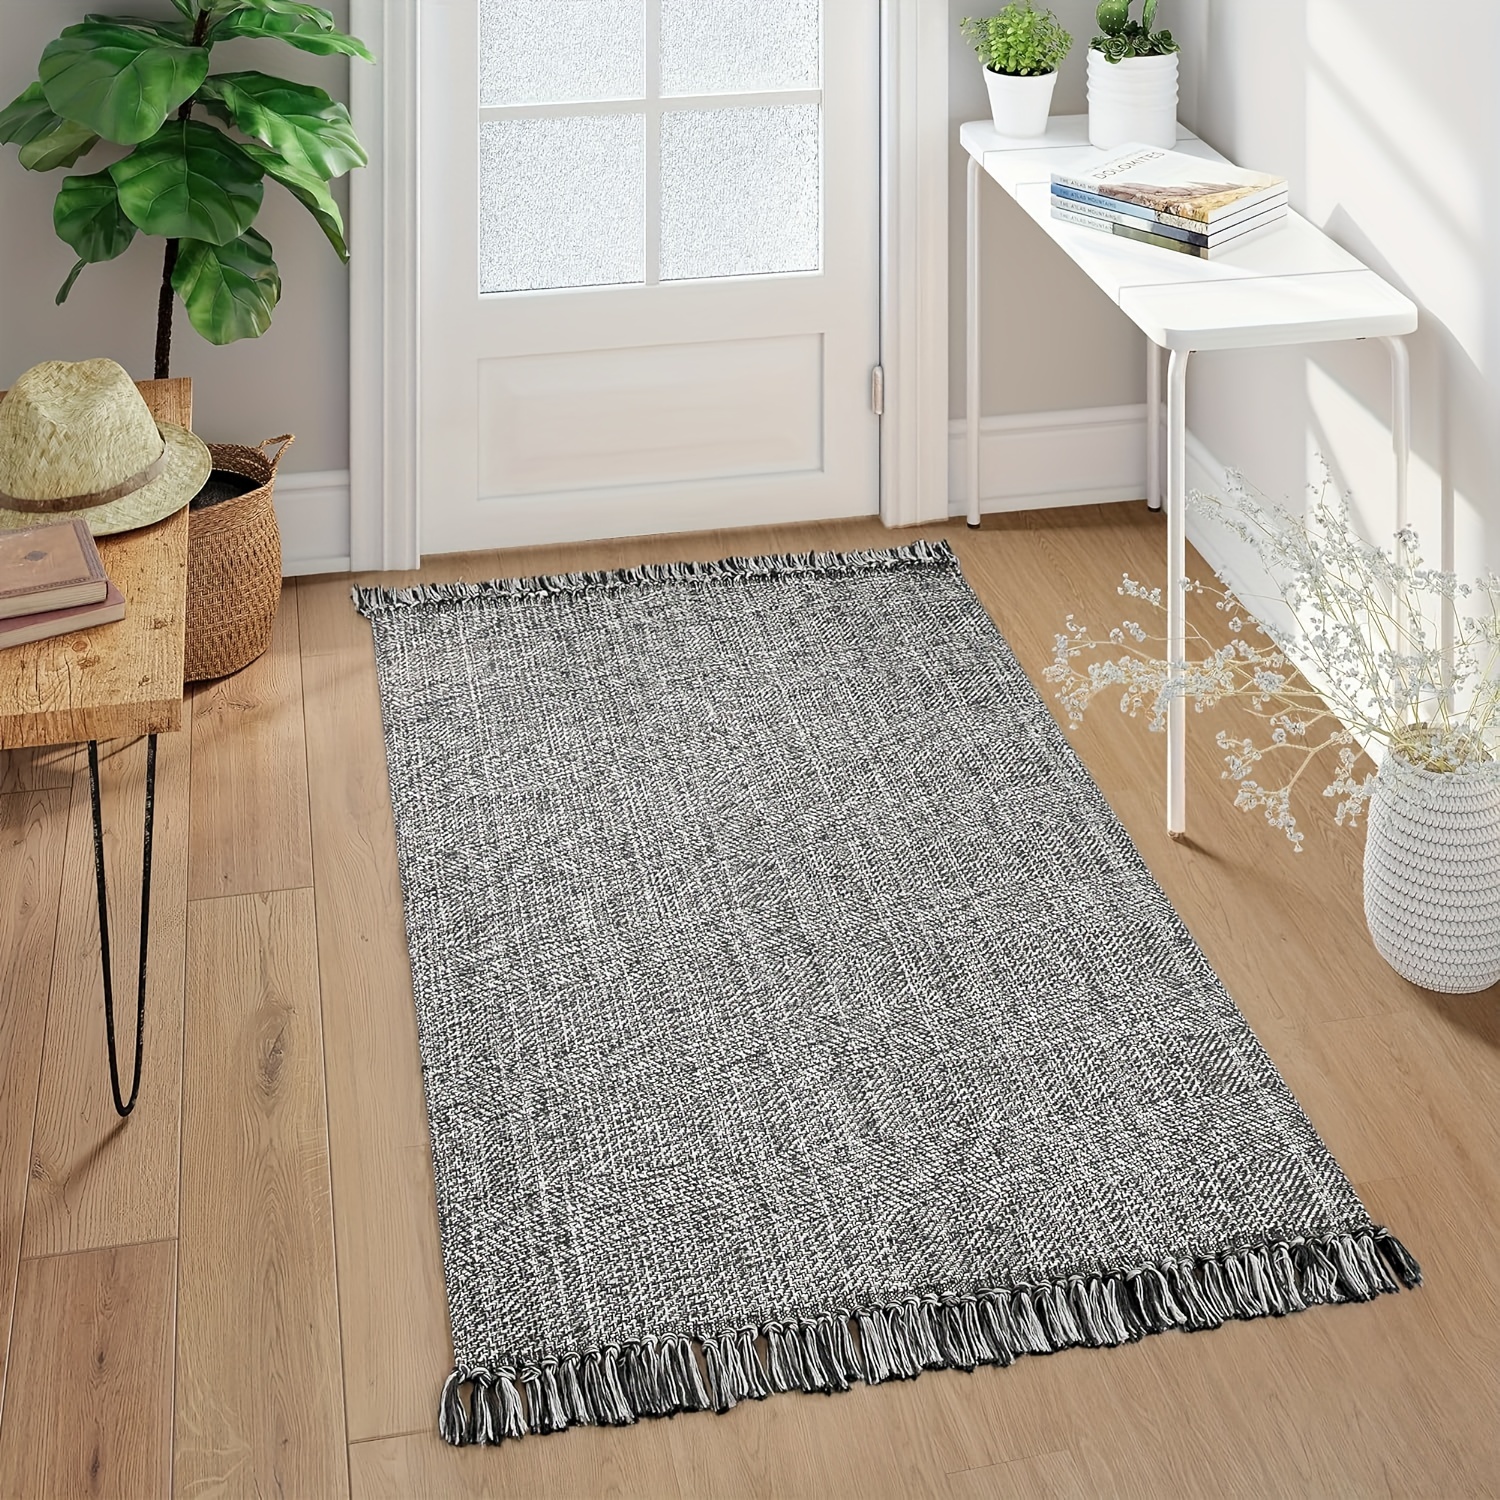 

3x5 Washable Kitchen Runner Rug - Boho Hallway Carpet Rug For Outdoor Farmhouse Decor, Hand-woven Long Bathroom Area Runner Rug For Entryway